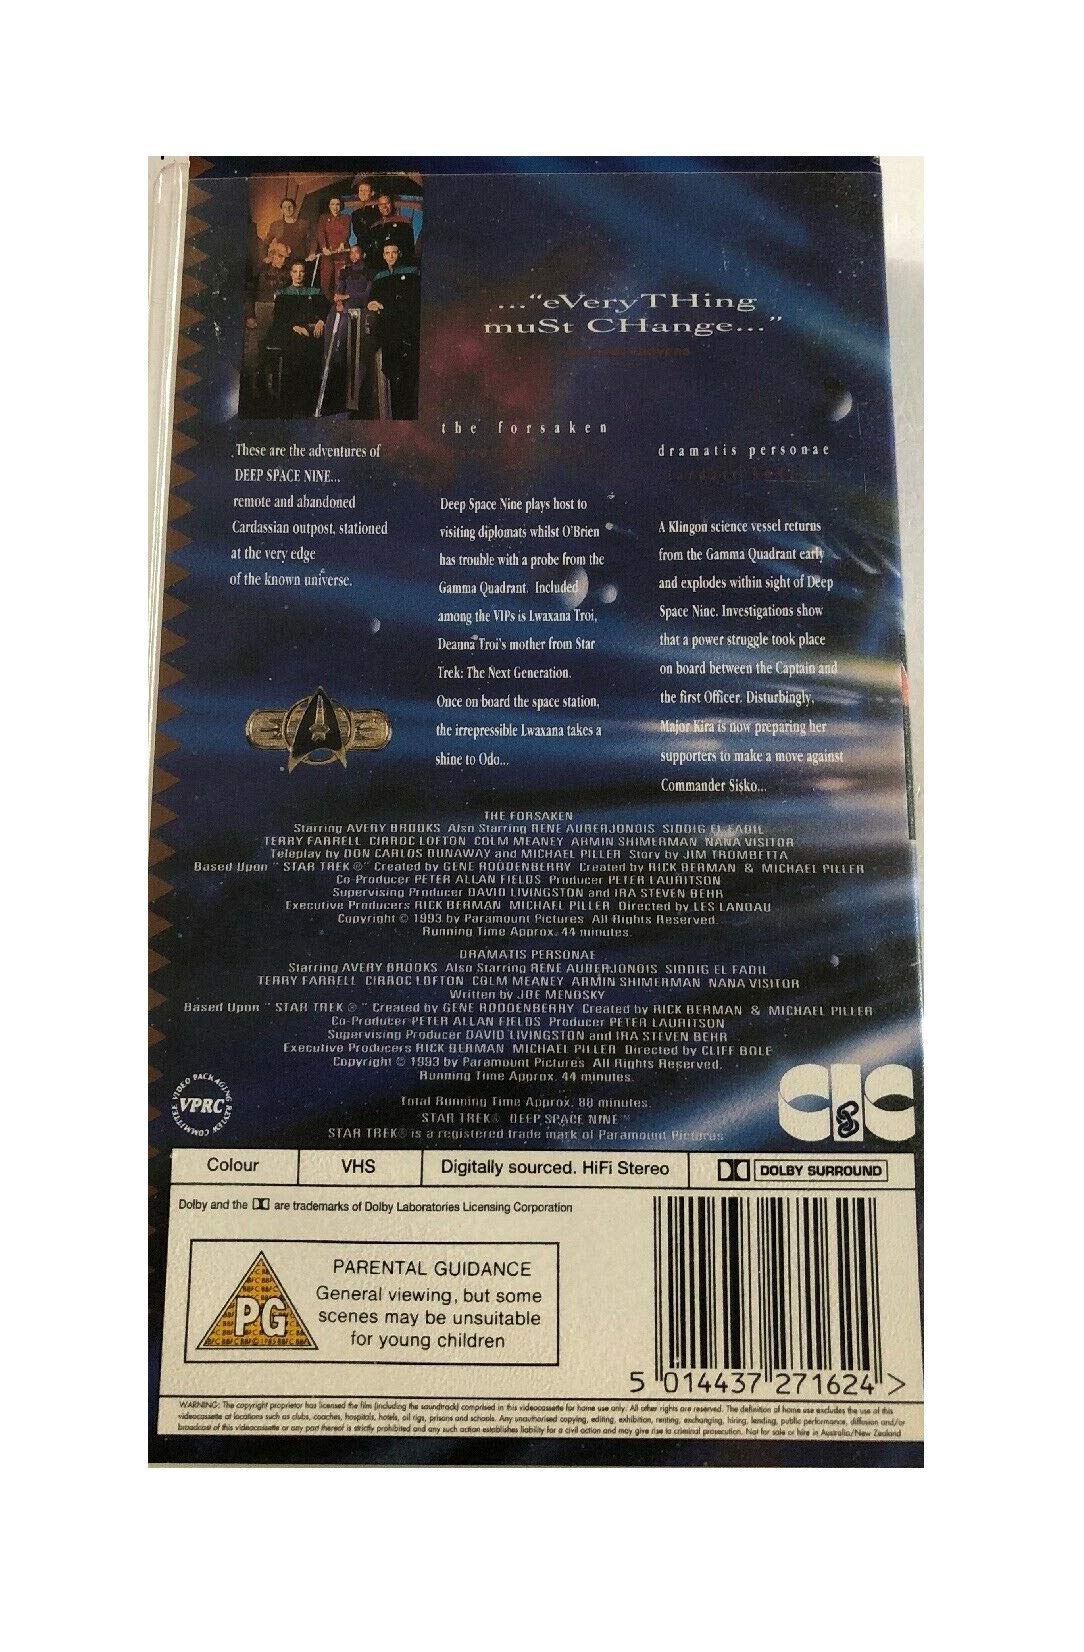 Vintage 1993 Star Trek Deep Space Nine Double Episode VHS Video Cassette Vol 9 - The Forsaken / Dramatis Persona - Former Shop Stock